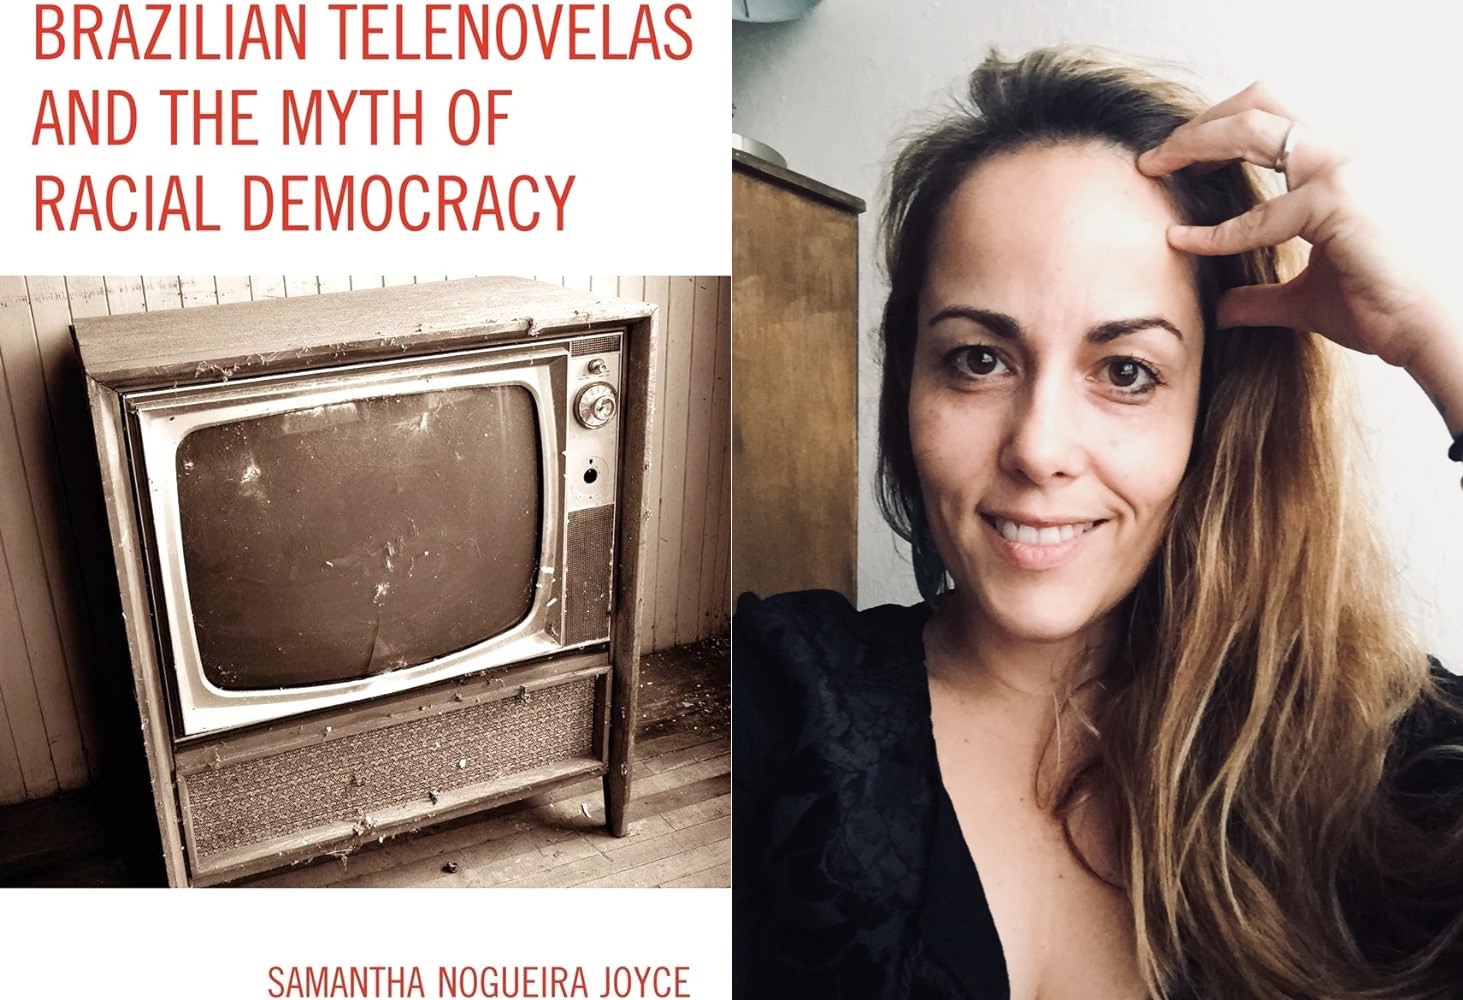 Samantha Nofueira Joyce and Book Cover